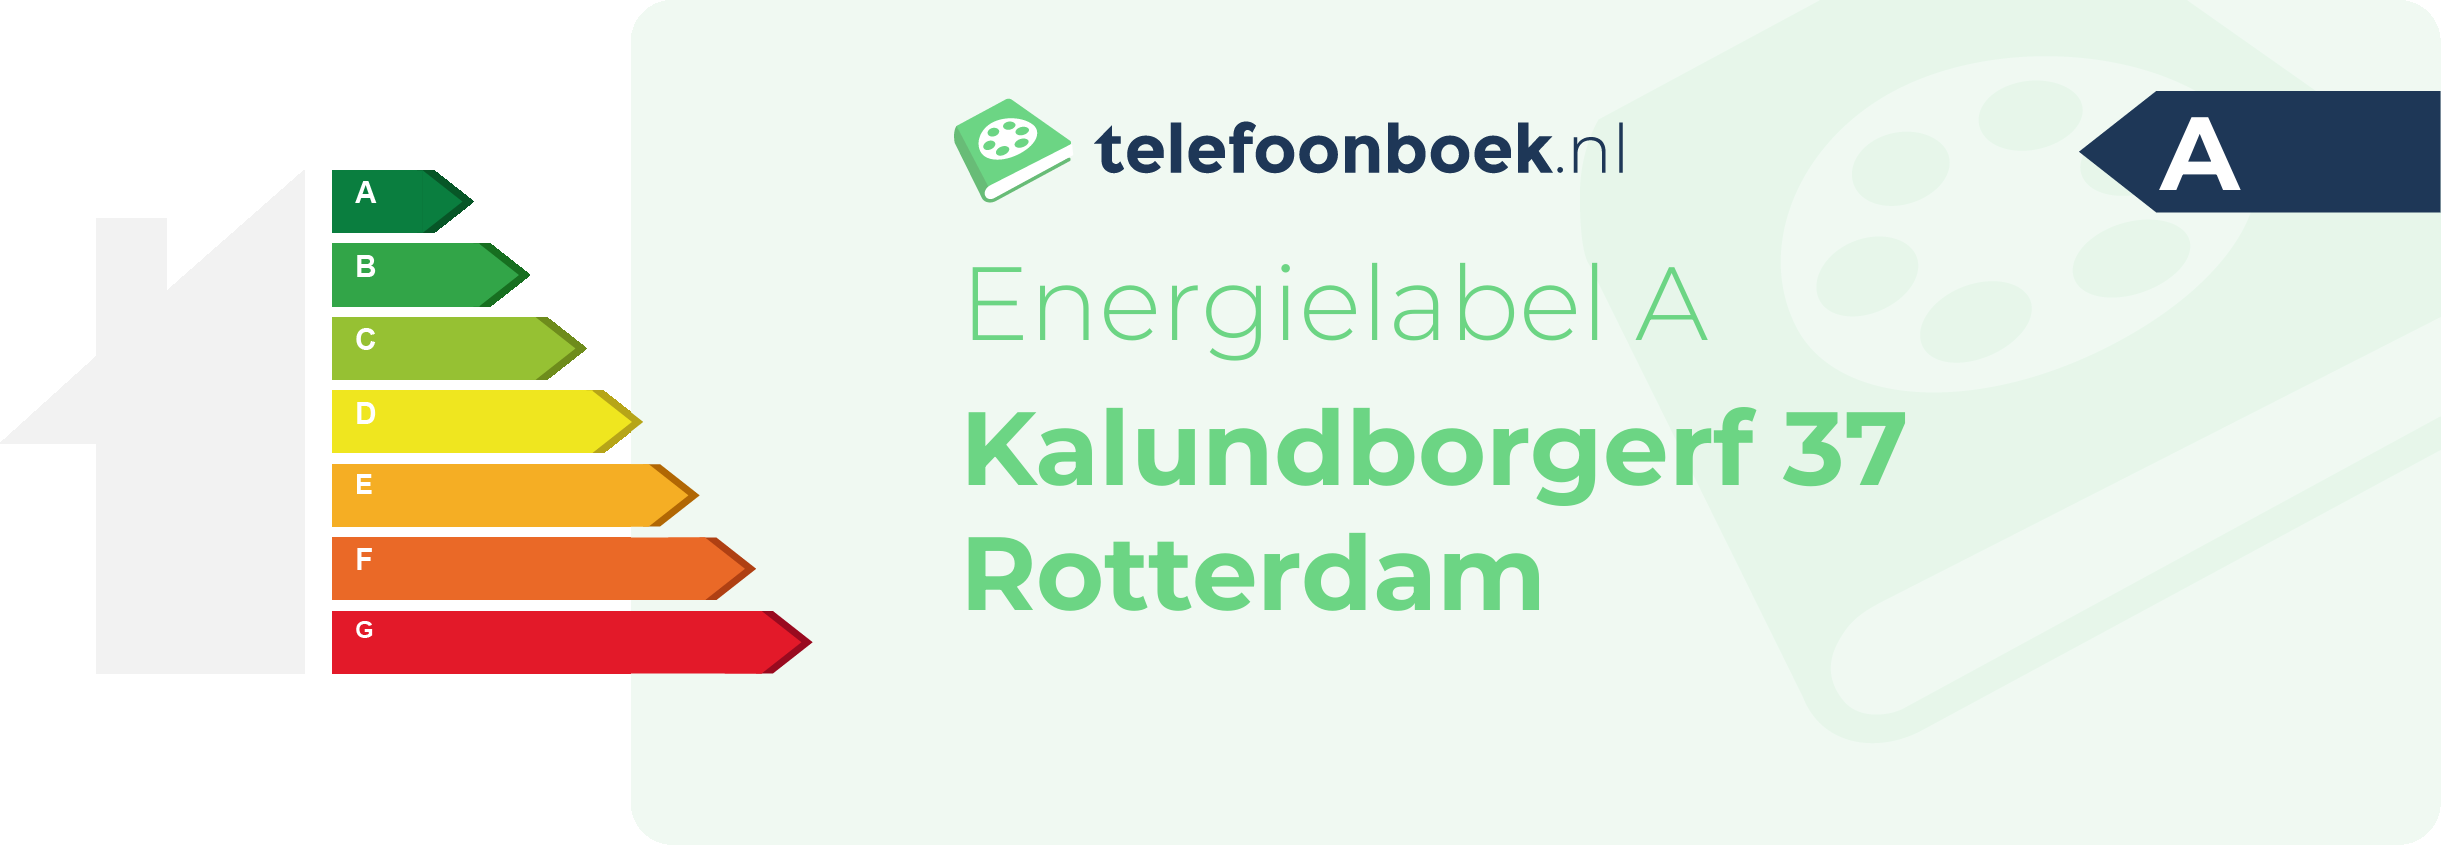 Energielabel Kalundborgerf 37 Rotterdam